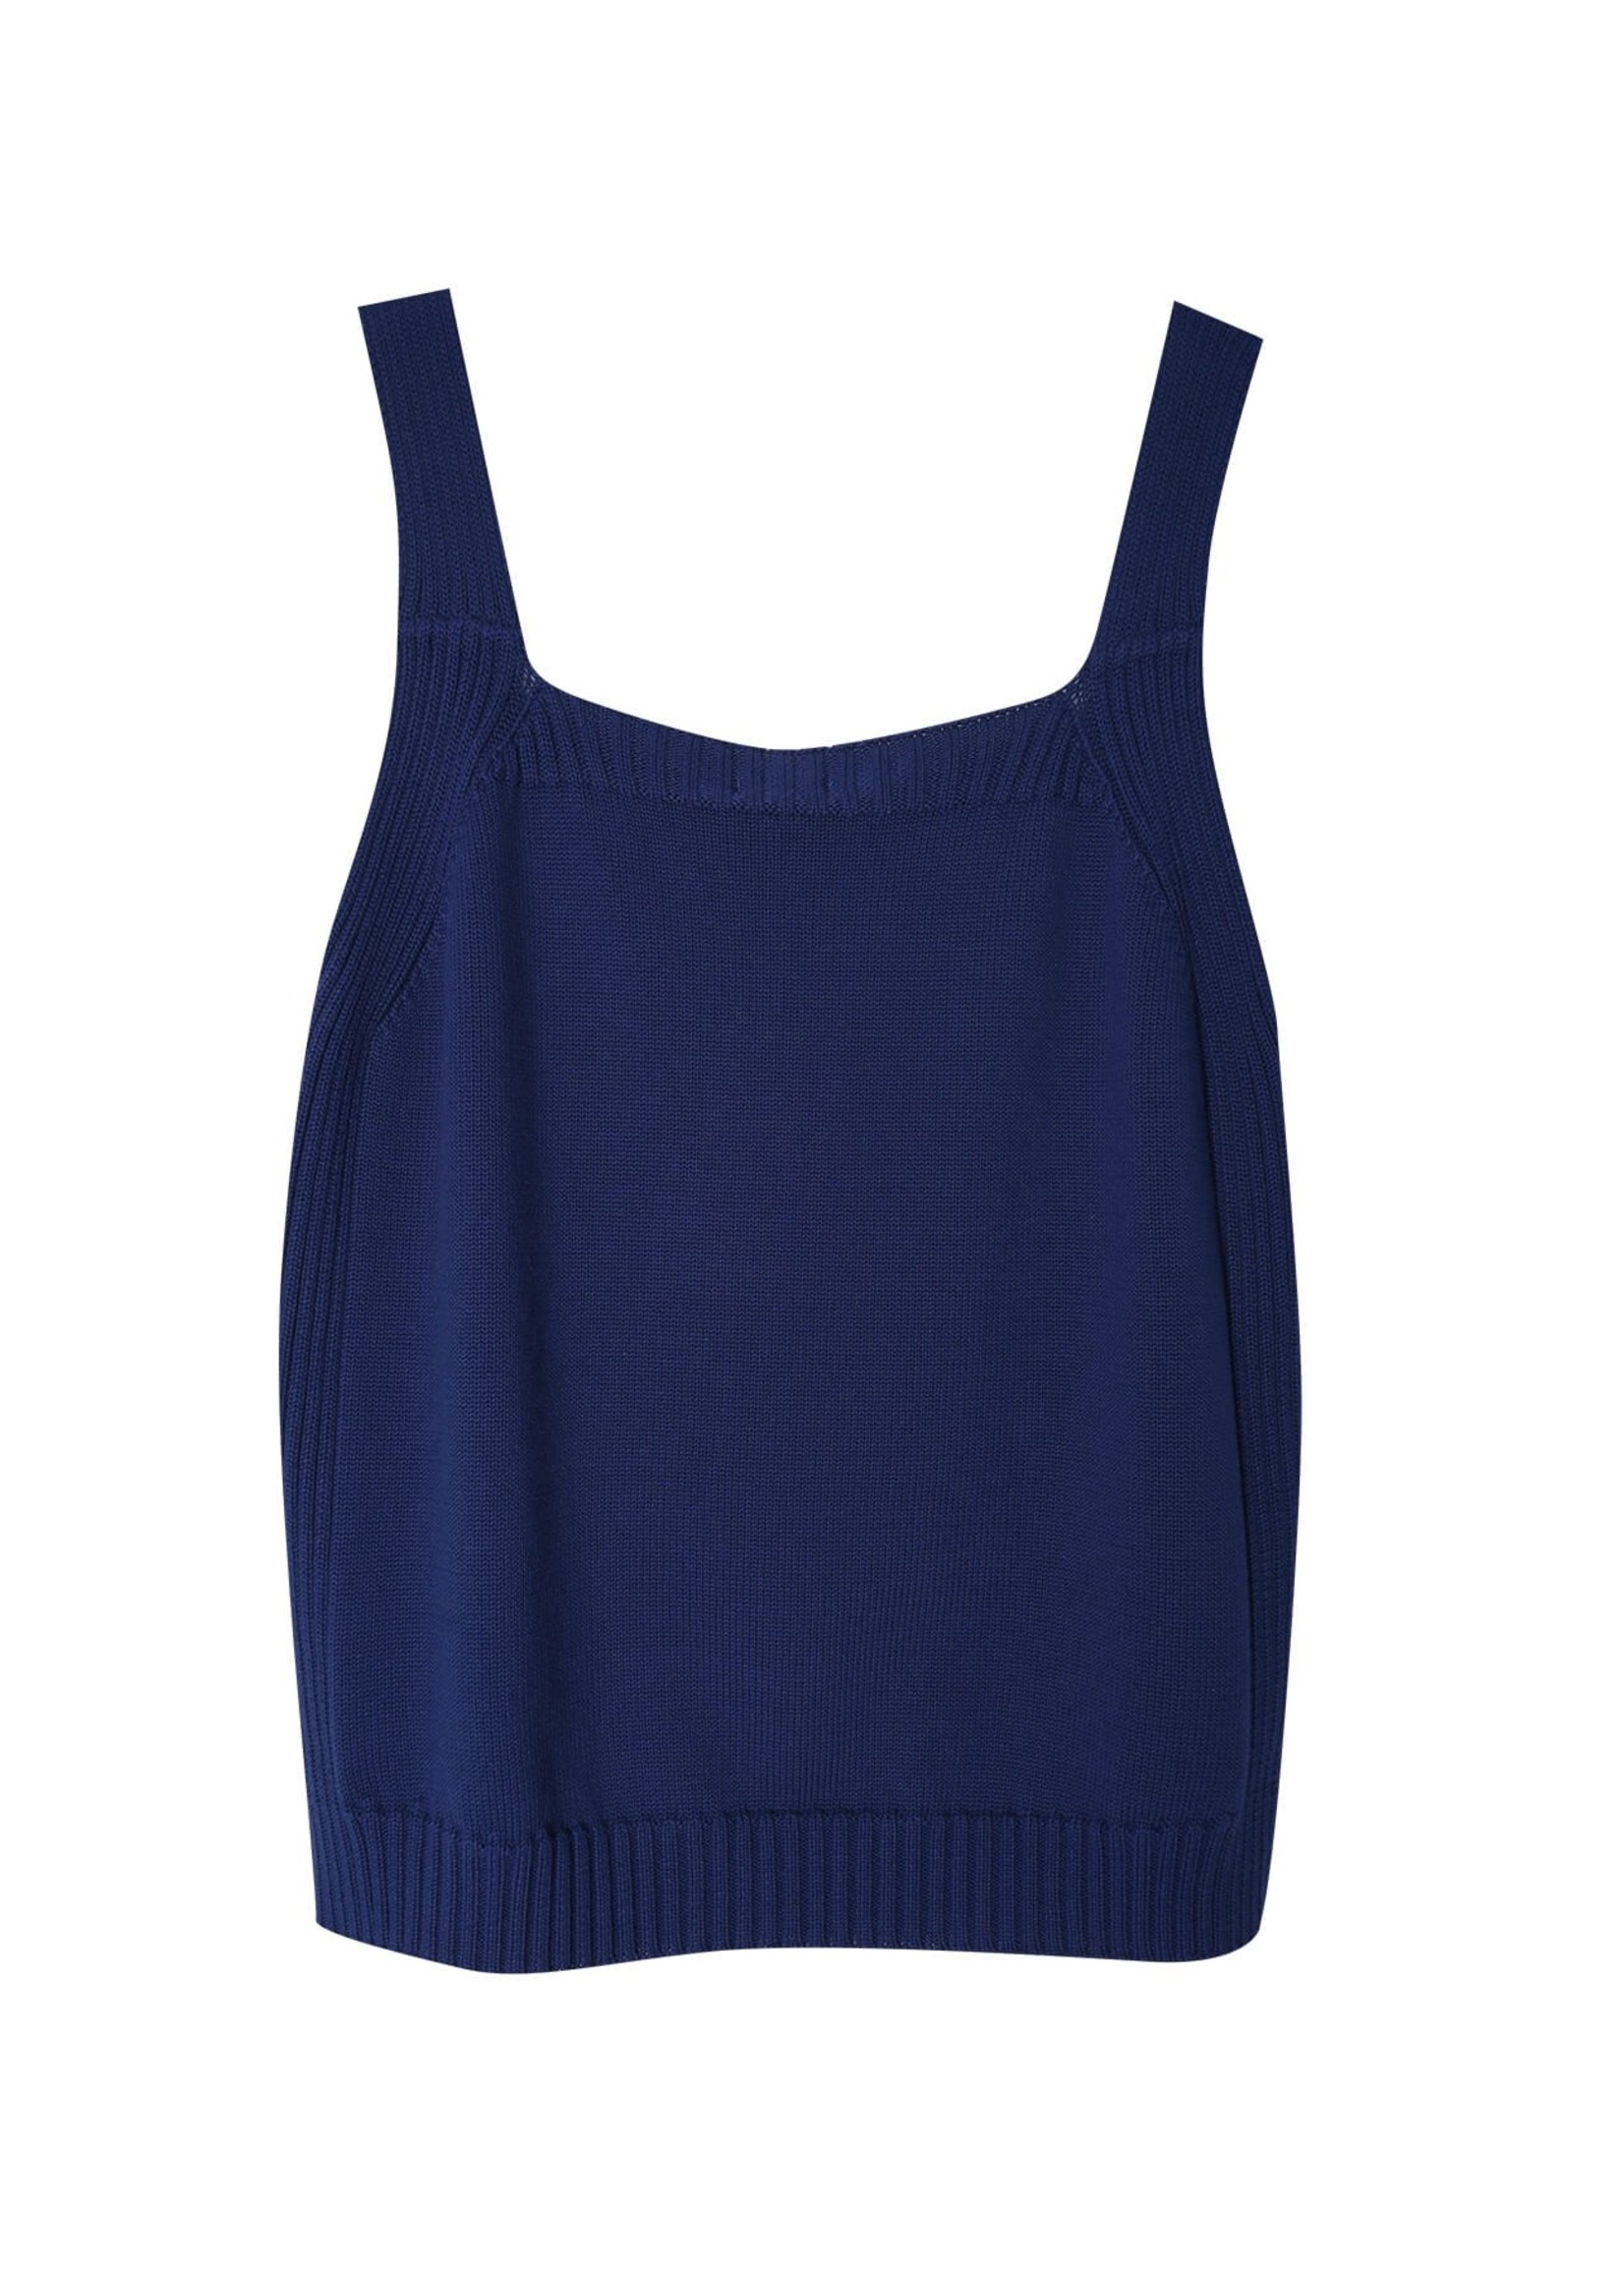 b5625 blue cotton knit top